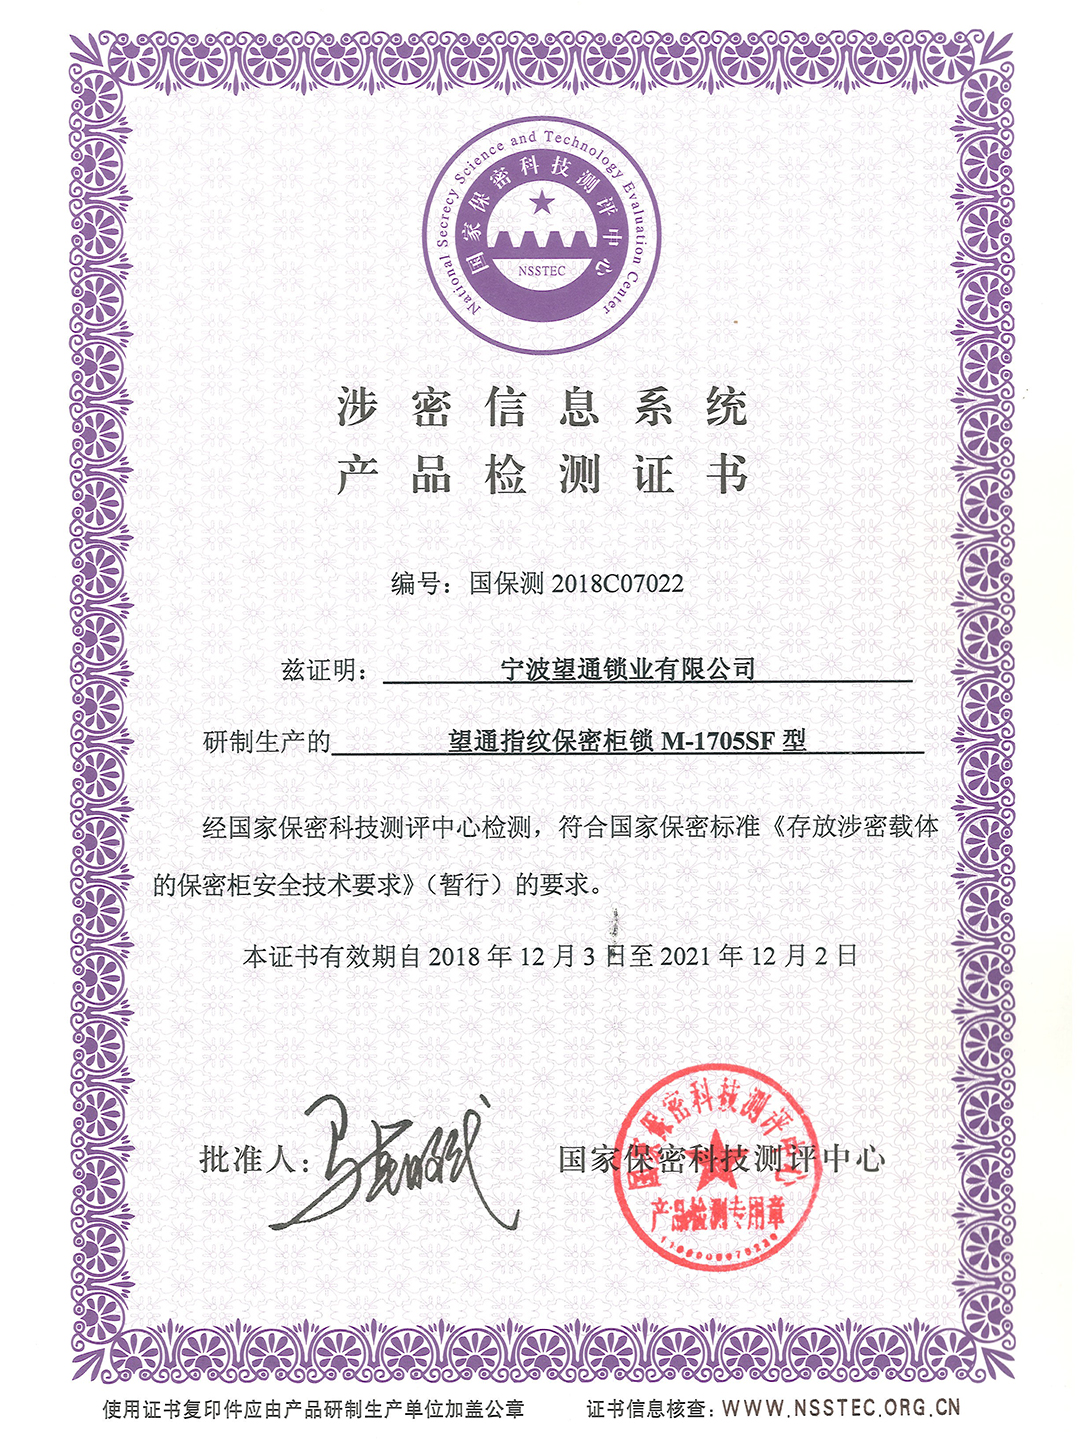 M-1705SF Security Test Certificate